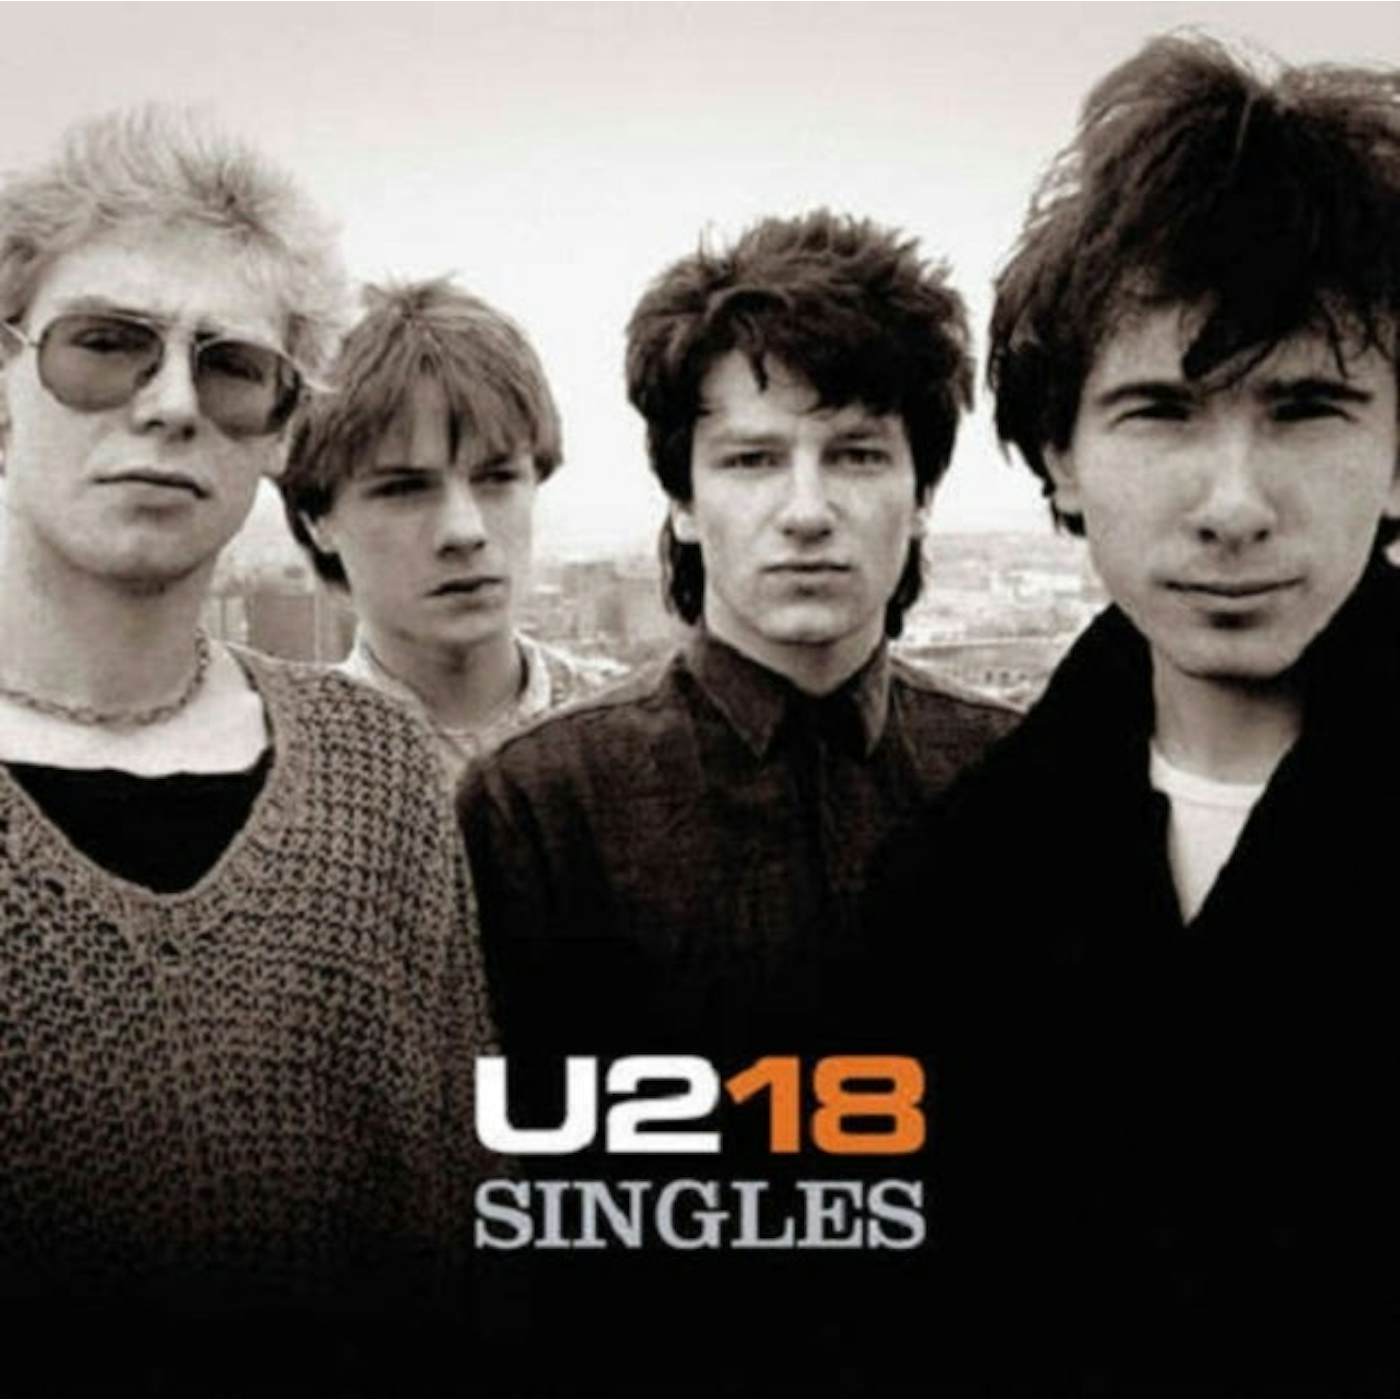 U2 LP Vinyl Record - U2 18  Singles